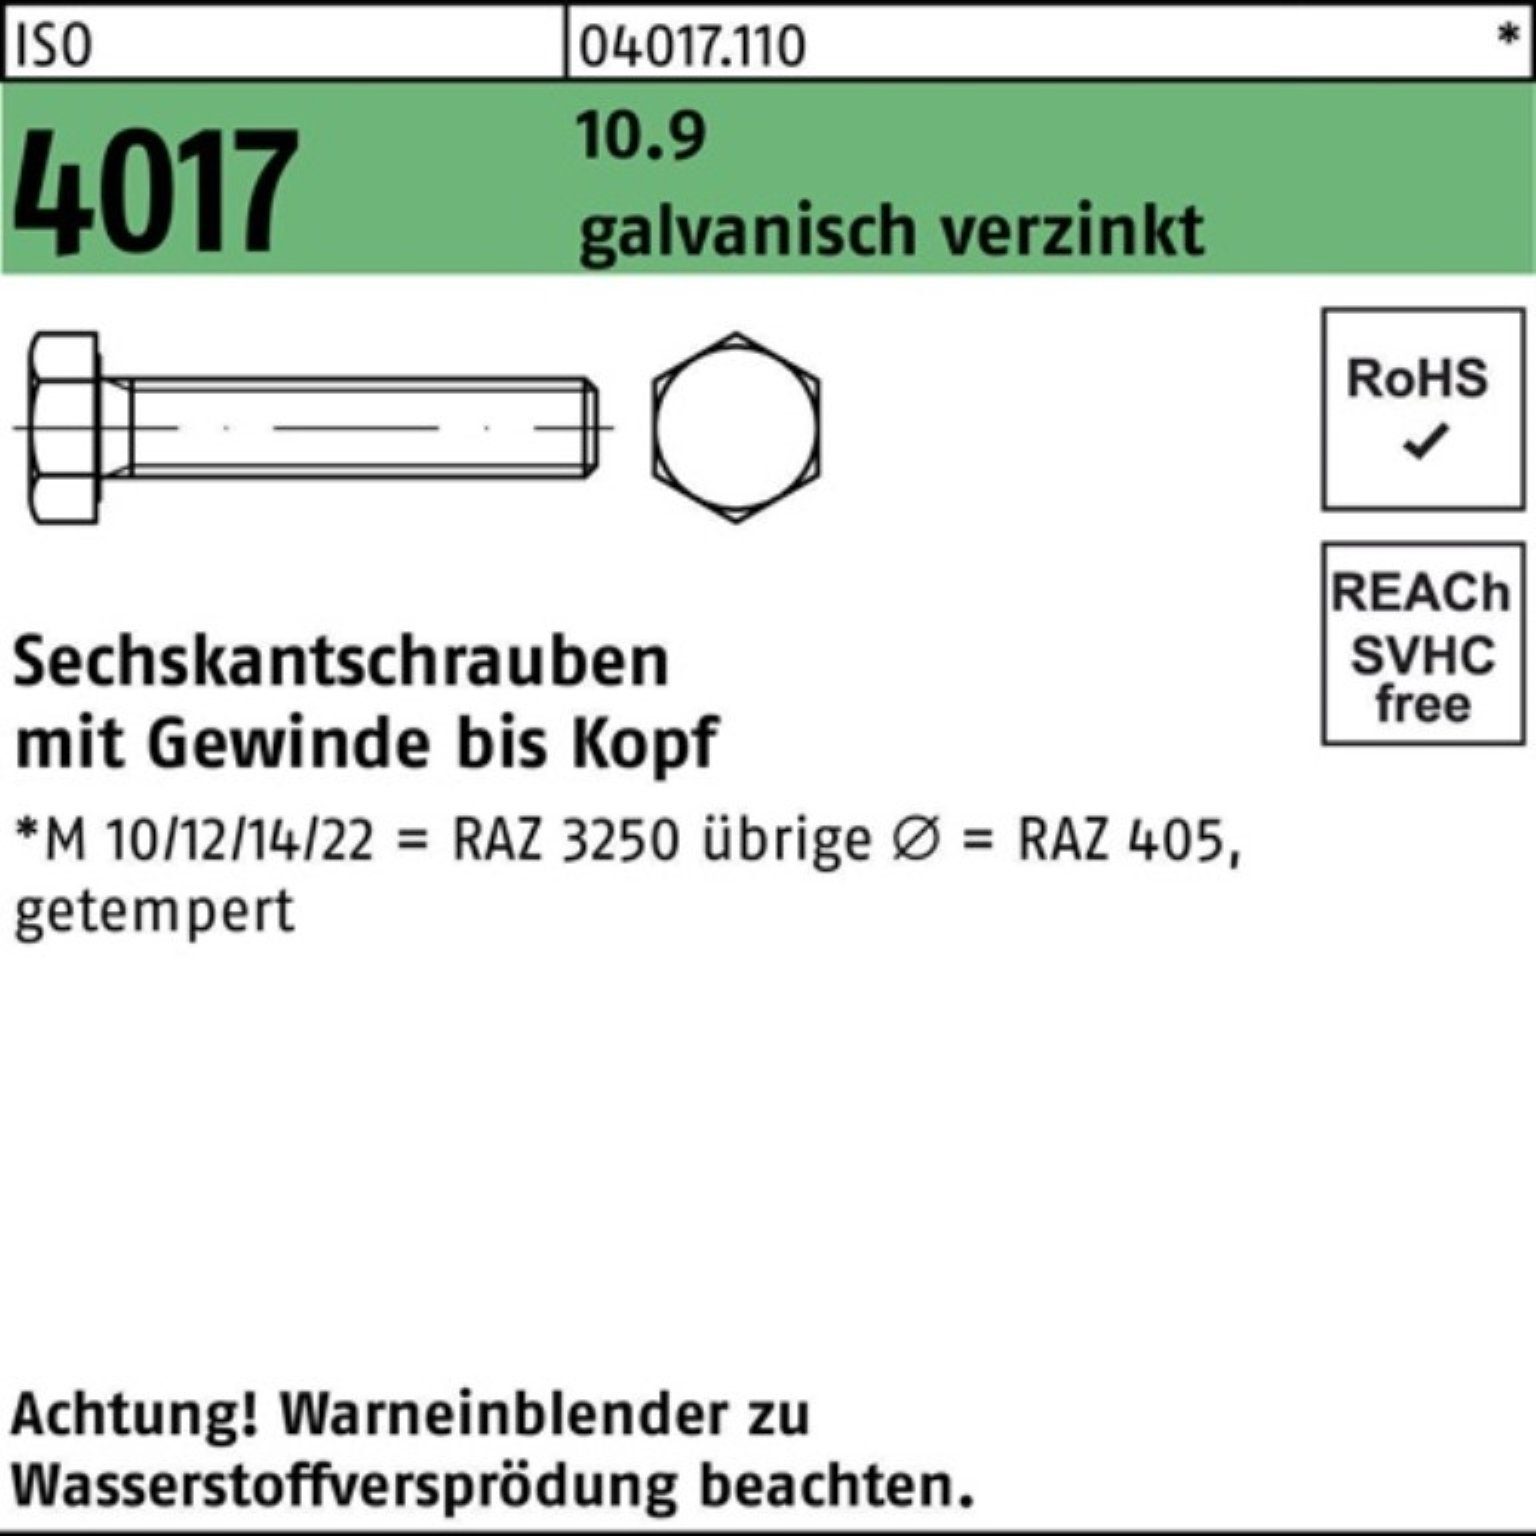 galv.verz. VG 200 Sechskantschraube S Bufab Pack 20 ISO 200er Sechskantschraube M10x 4017 10.9